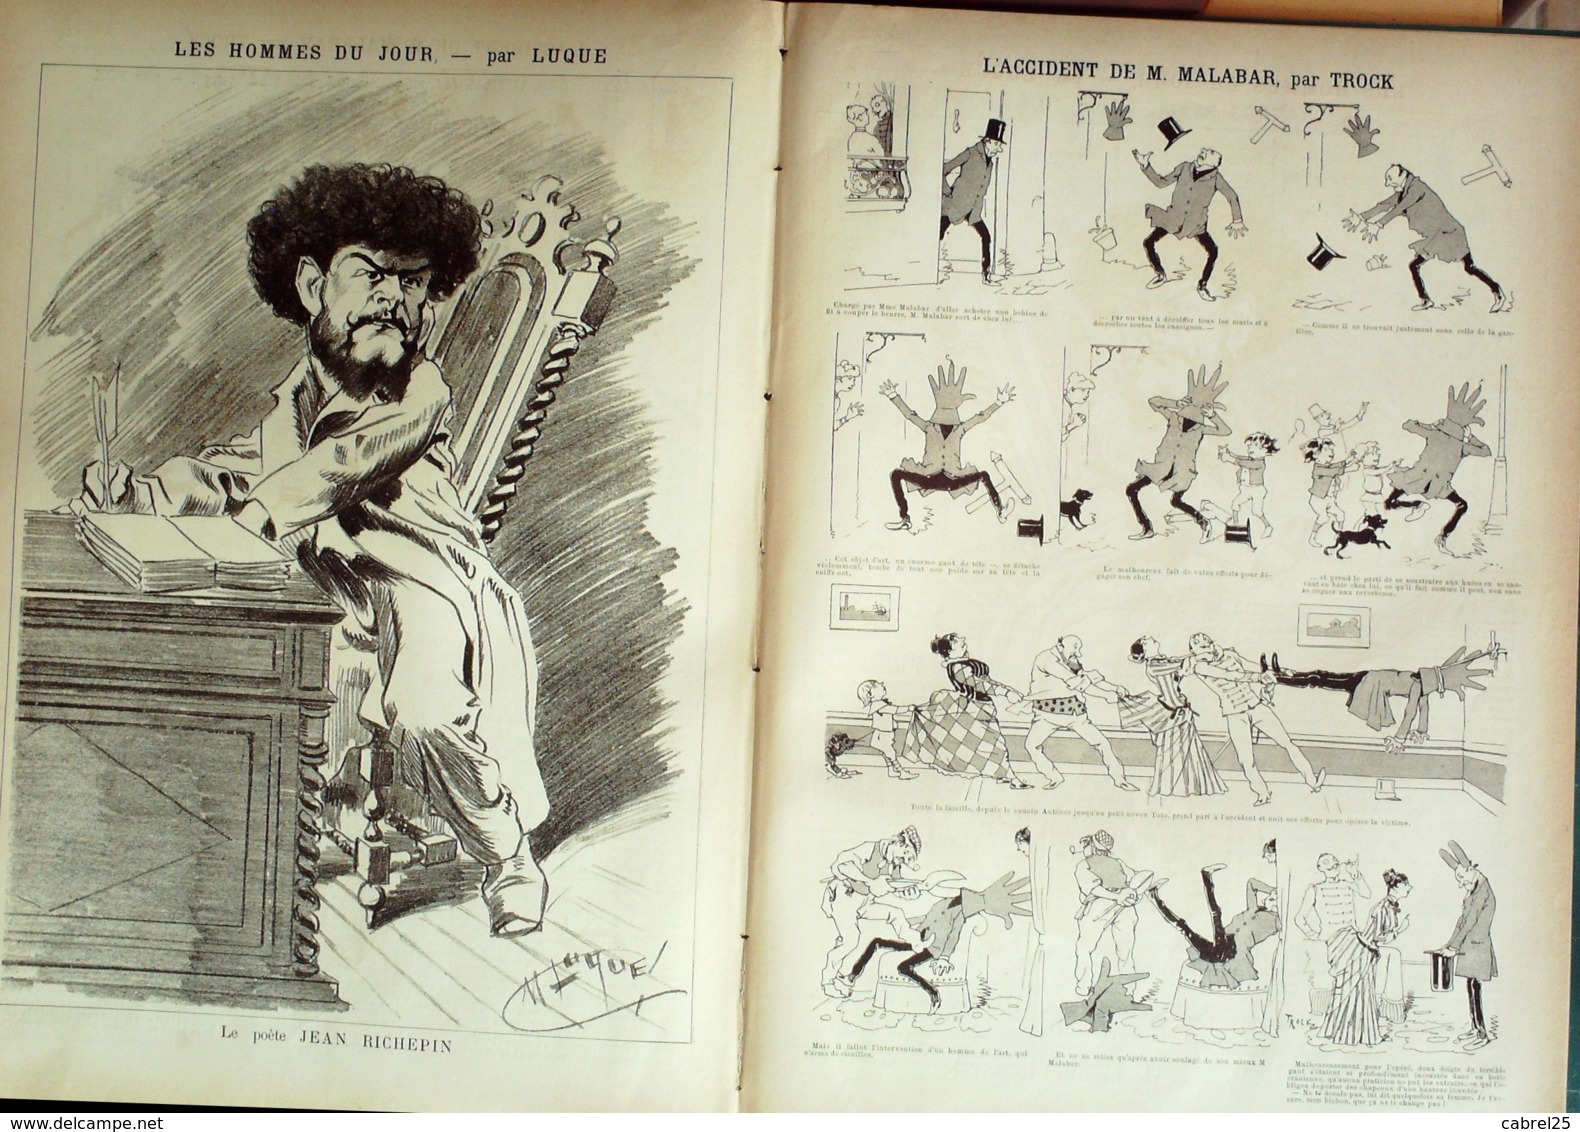 LA CARICATURE-1886-359-ACTUALITES PARISIENNES-DRANER-POETE JEAN RICHEPIN/LUQUE TROCK FOX JOB - Magazines - Before 1900